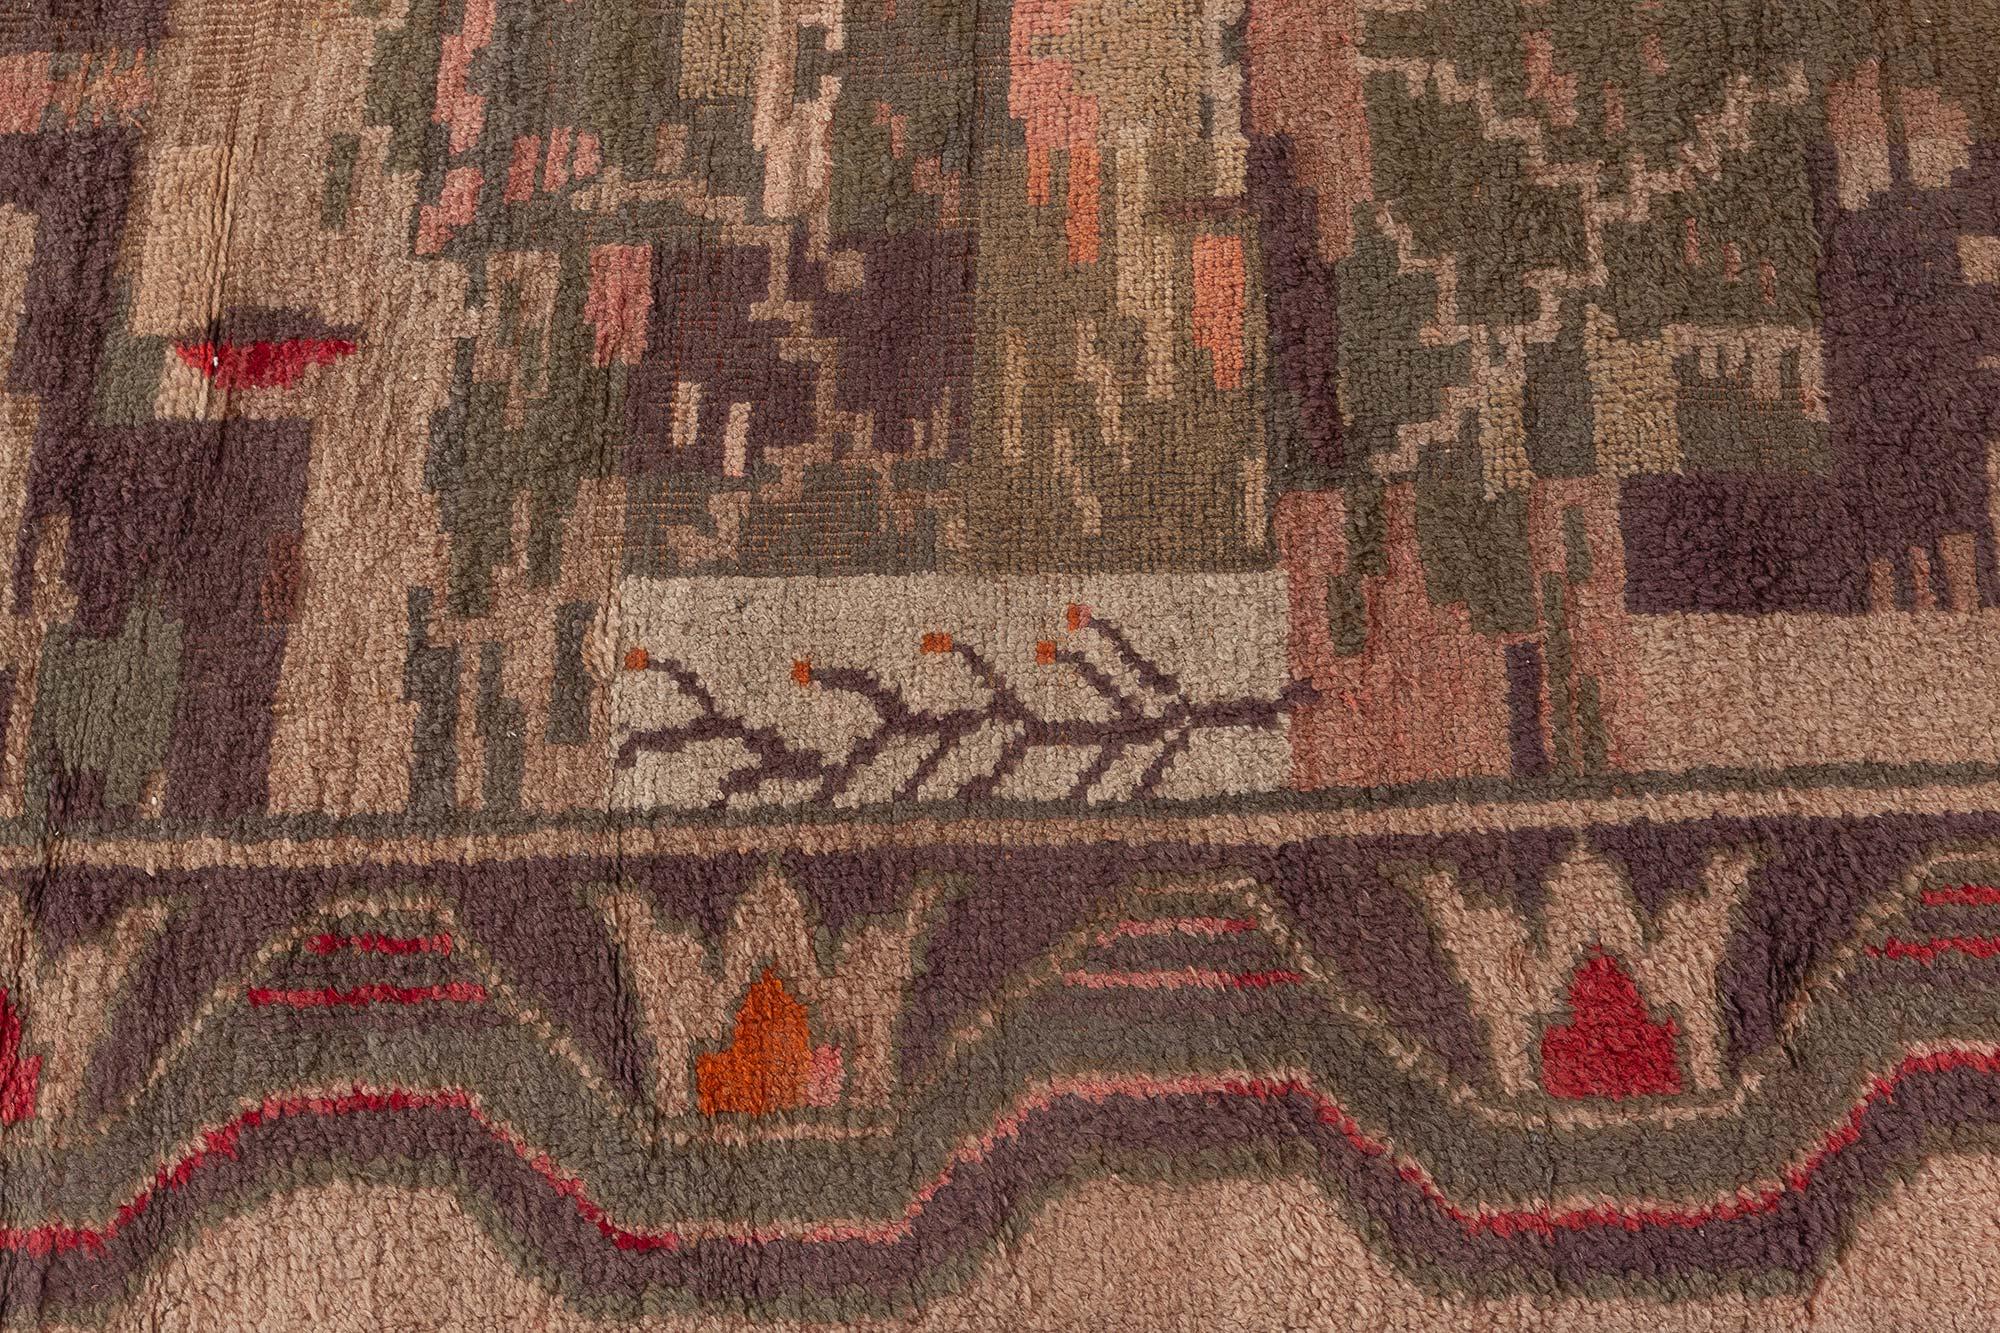 Vintage Swedish Bold Abstract Design Carpet
Size: 9'9